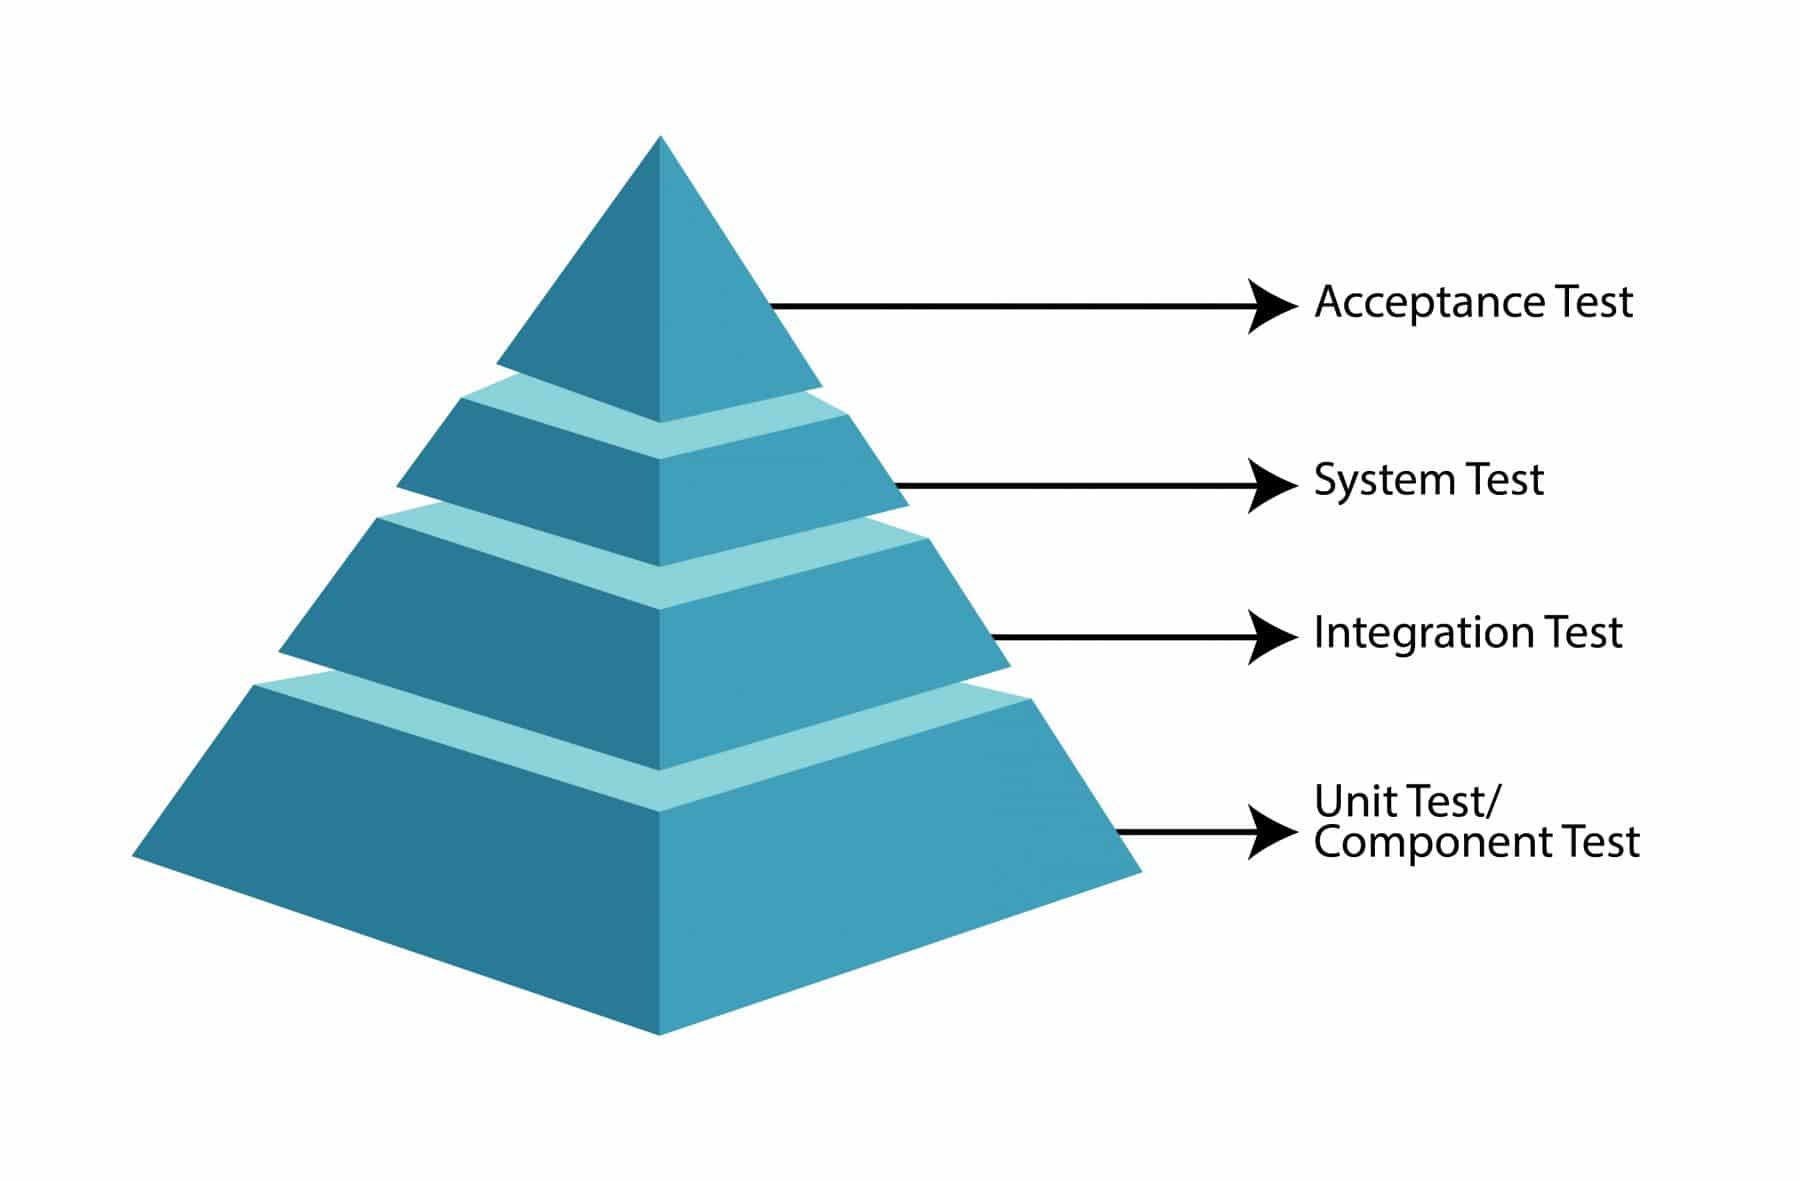 Testing Pyramid - Unit Test & Component Testing Level